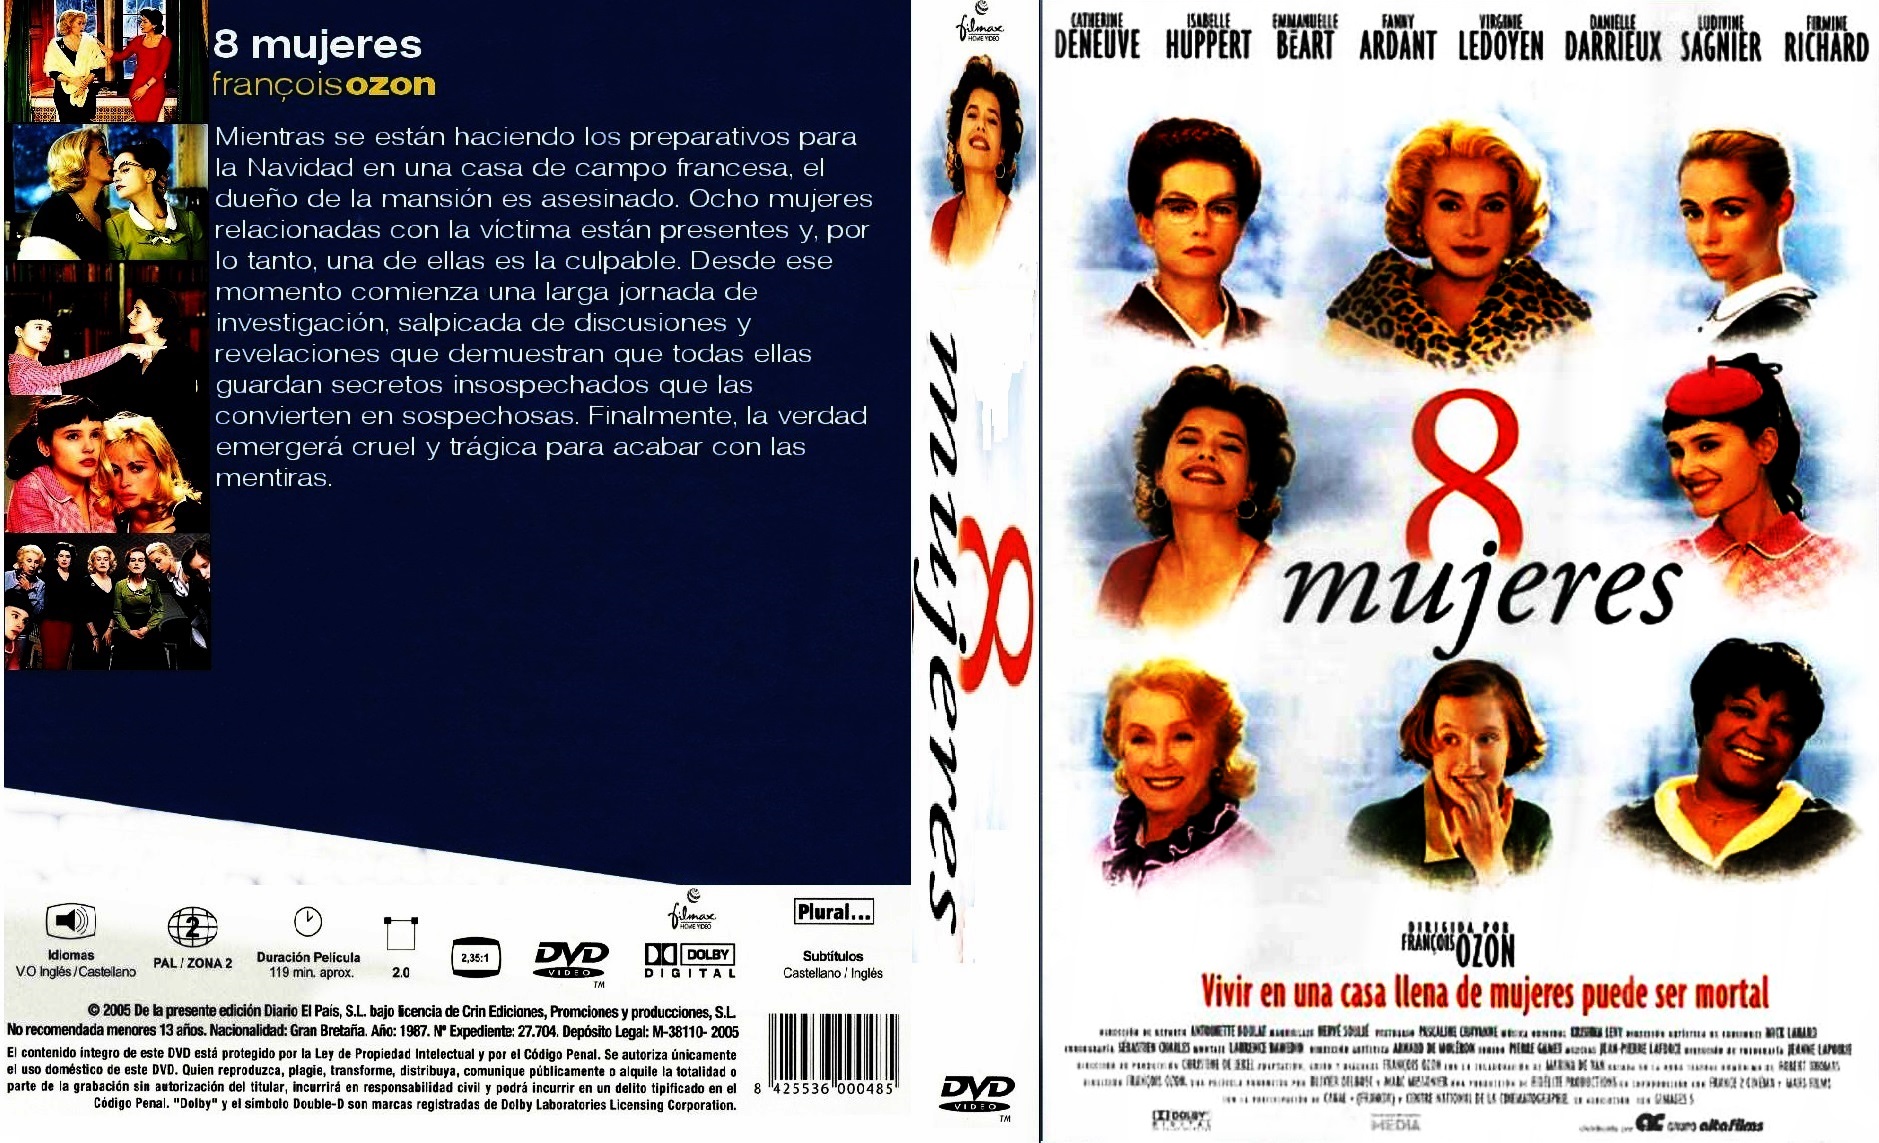 8Mujeresdvd3 - 8 Mujeres [2002] [DVD5/Pal] [Audio:Castellano,Francés] [Sub:Español] [Comedia_Musical]